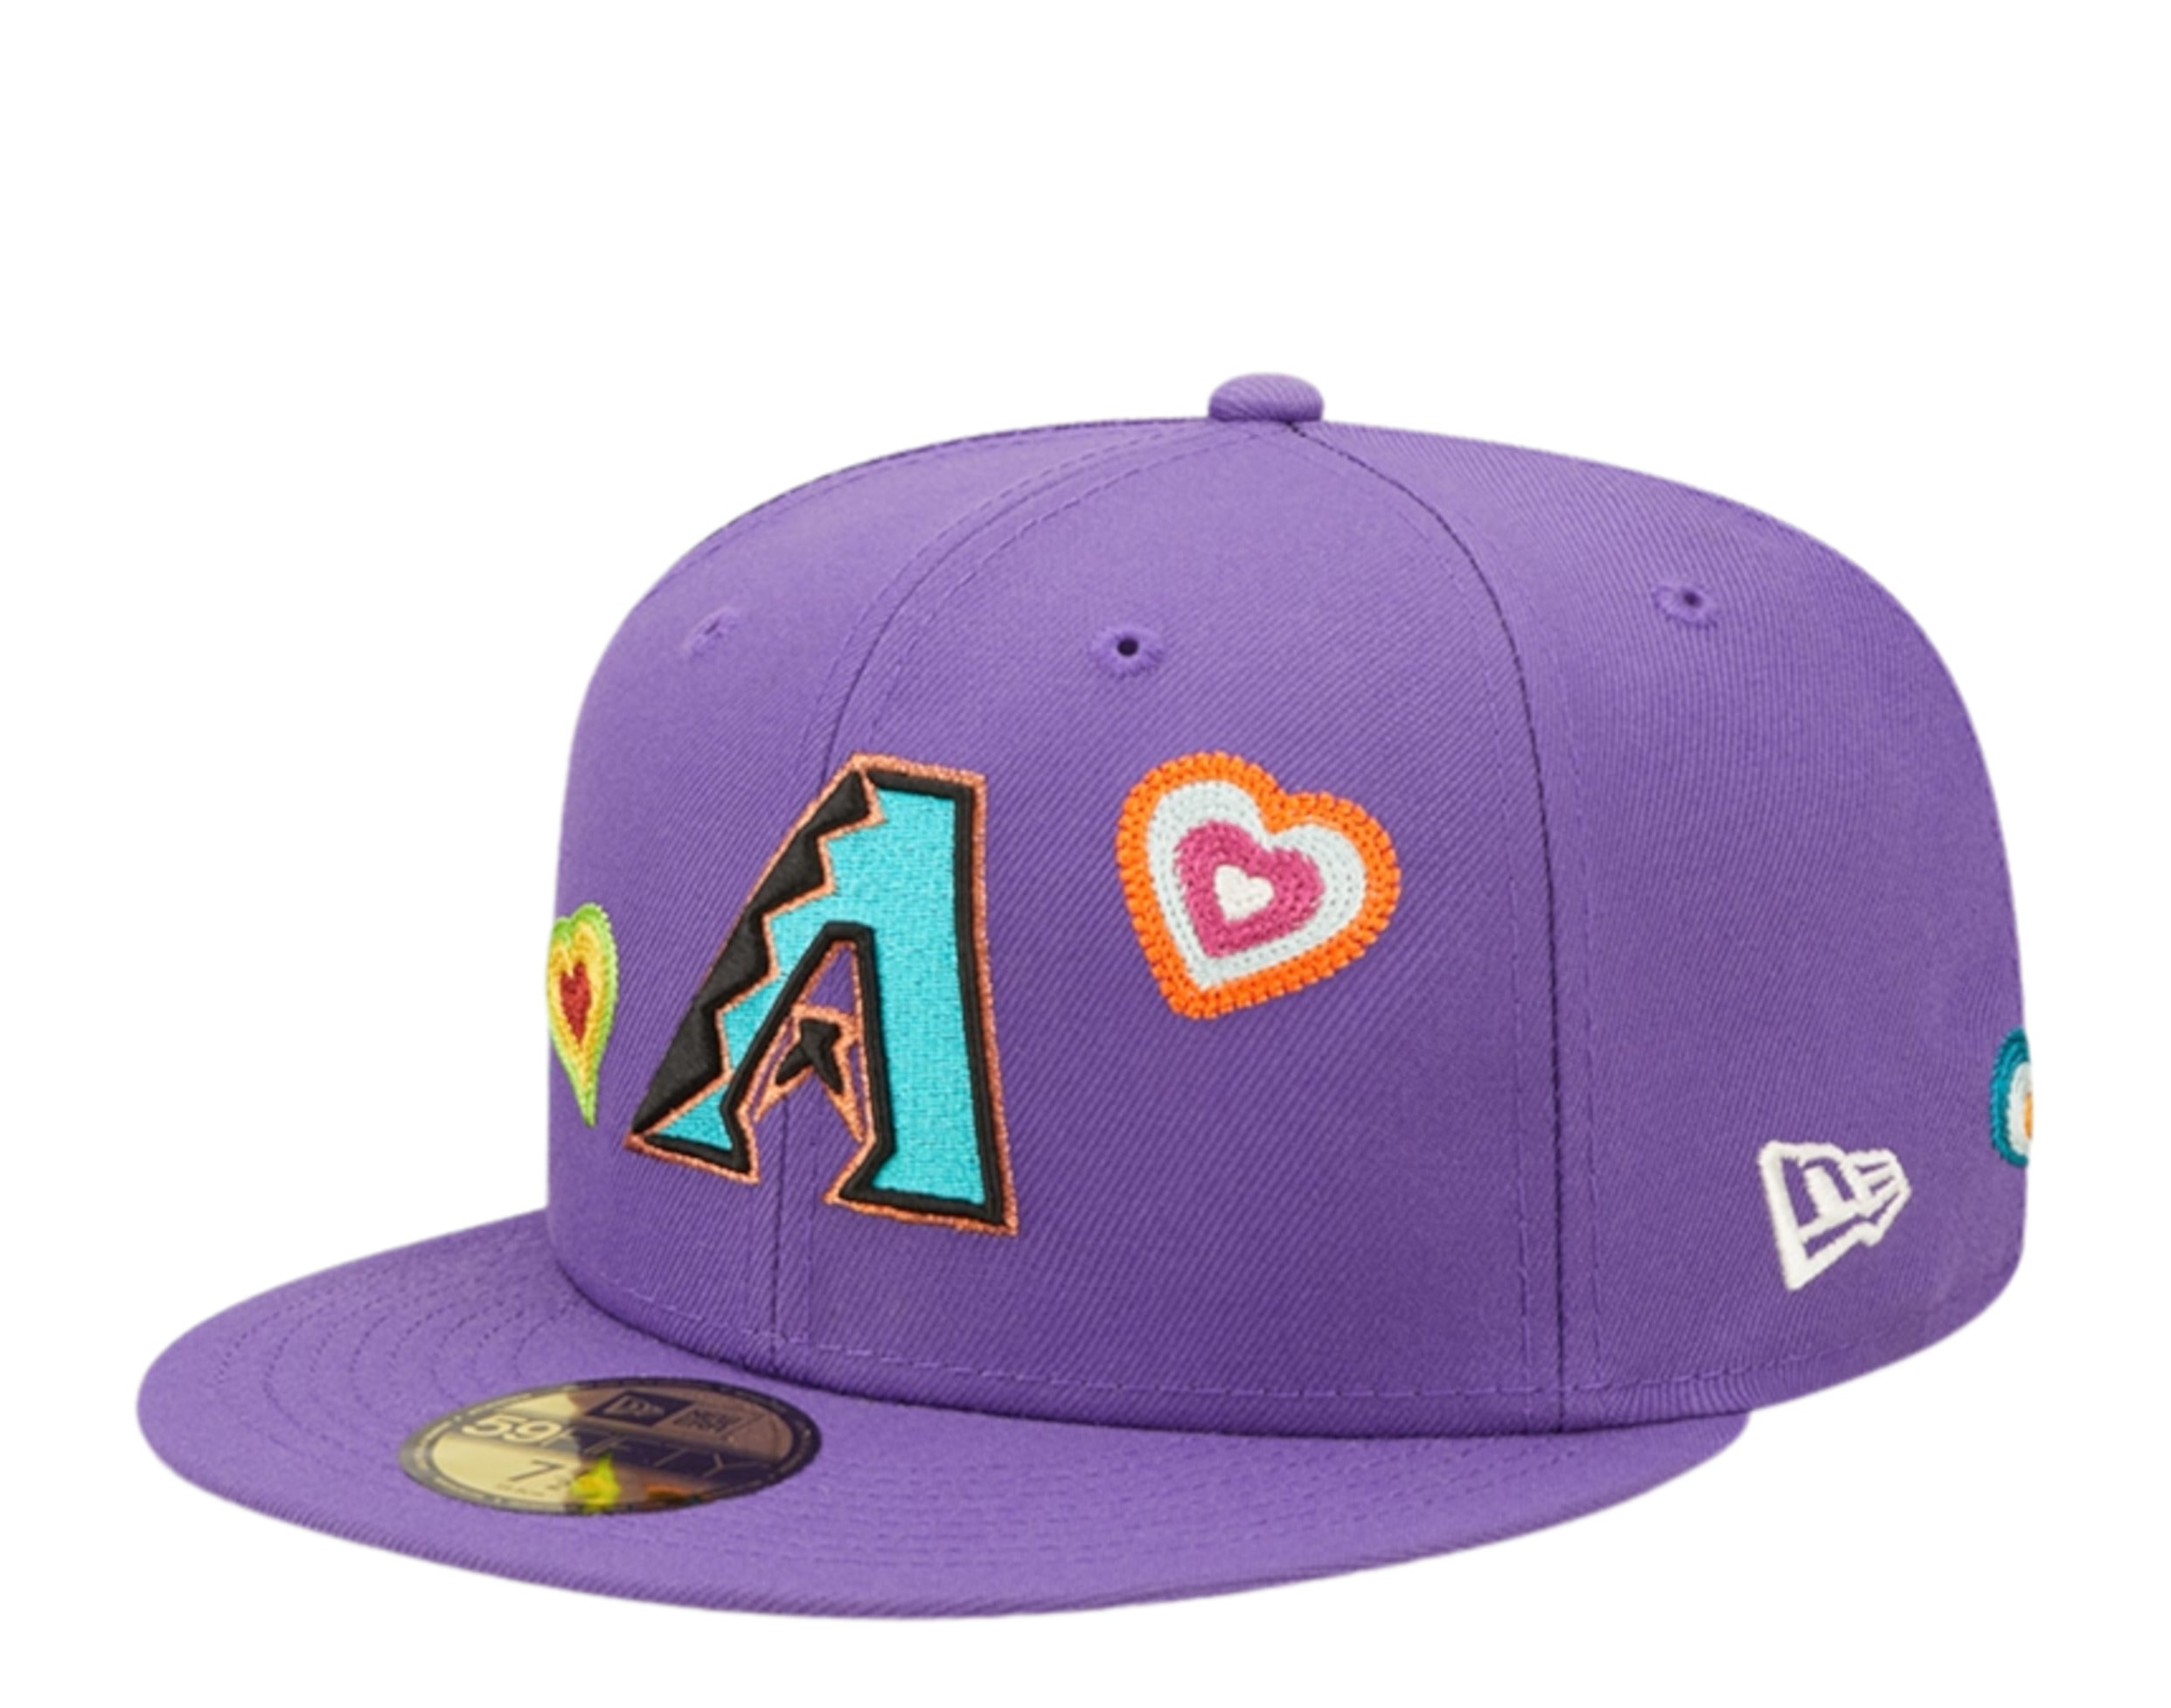 Tampa Bay Rays Pink Baseball Hat 59Fifty New Era MLB Authentic Sz 7 1/8 New